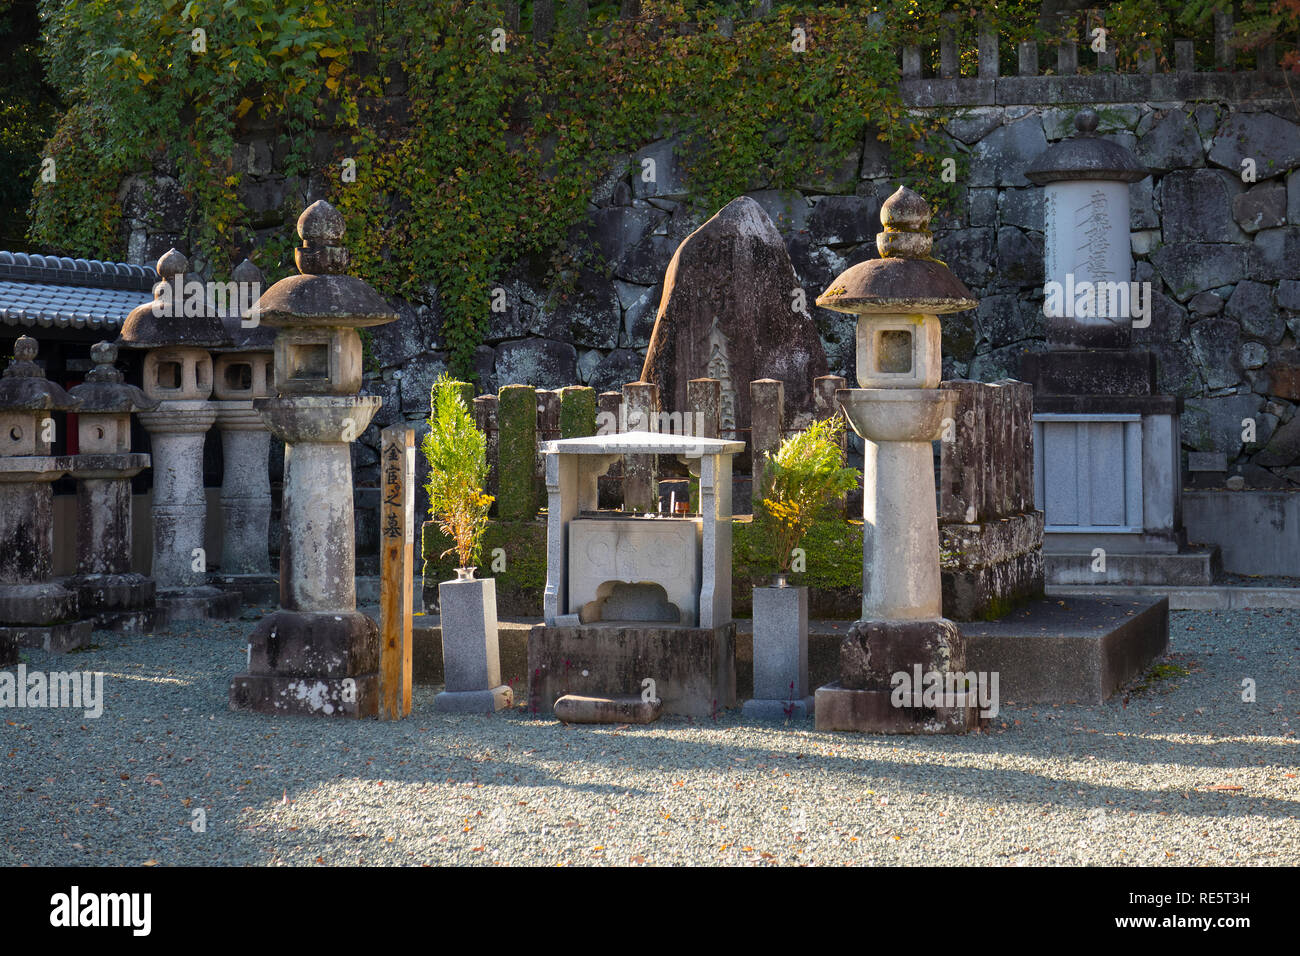 Kumamoto, Japan - November 13, 2018: Shrine and old stone lanterns on the grounds of the Honmyo-ji Temple Stock Photo